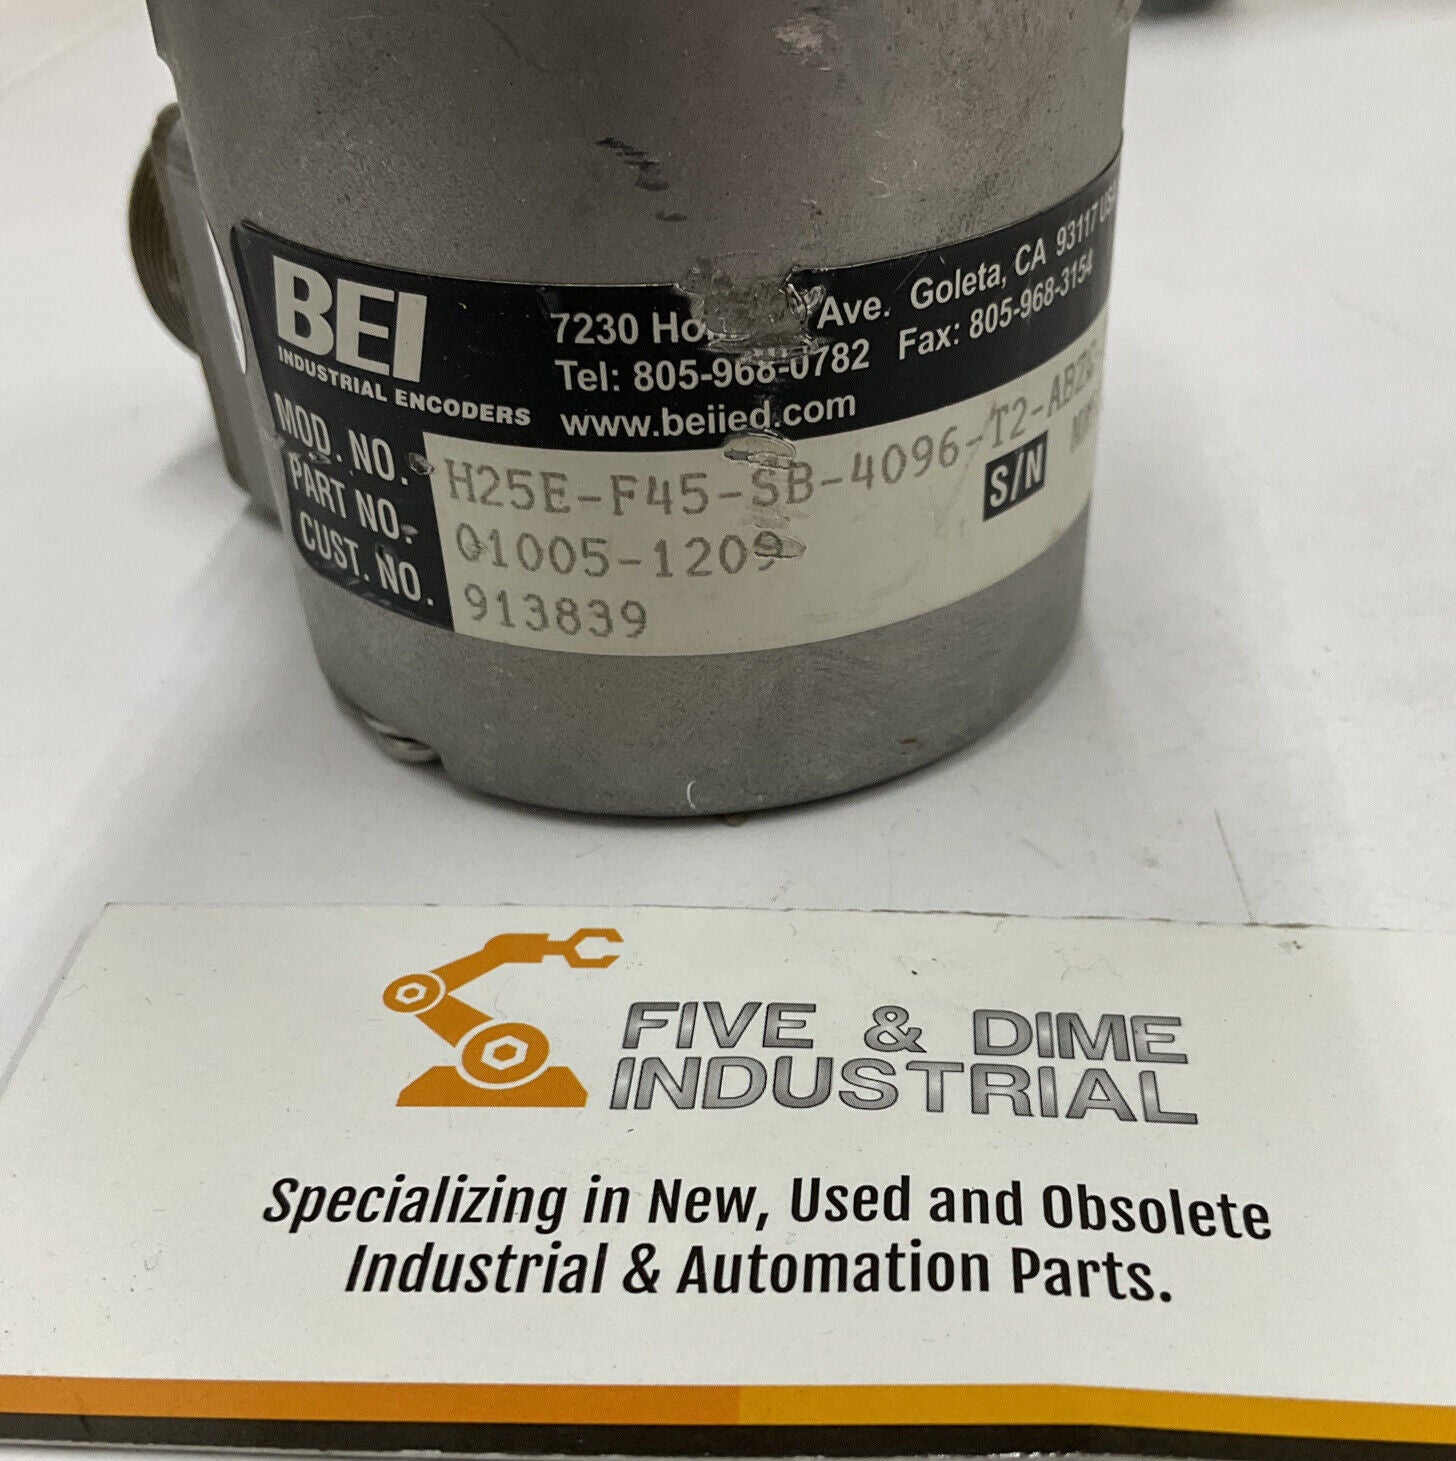 BEI 01005-1209 Industrial Encoder H25E-F45-SB-4096-T2  (RE125)